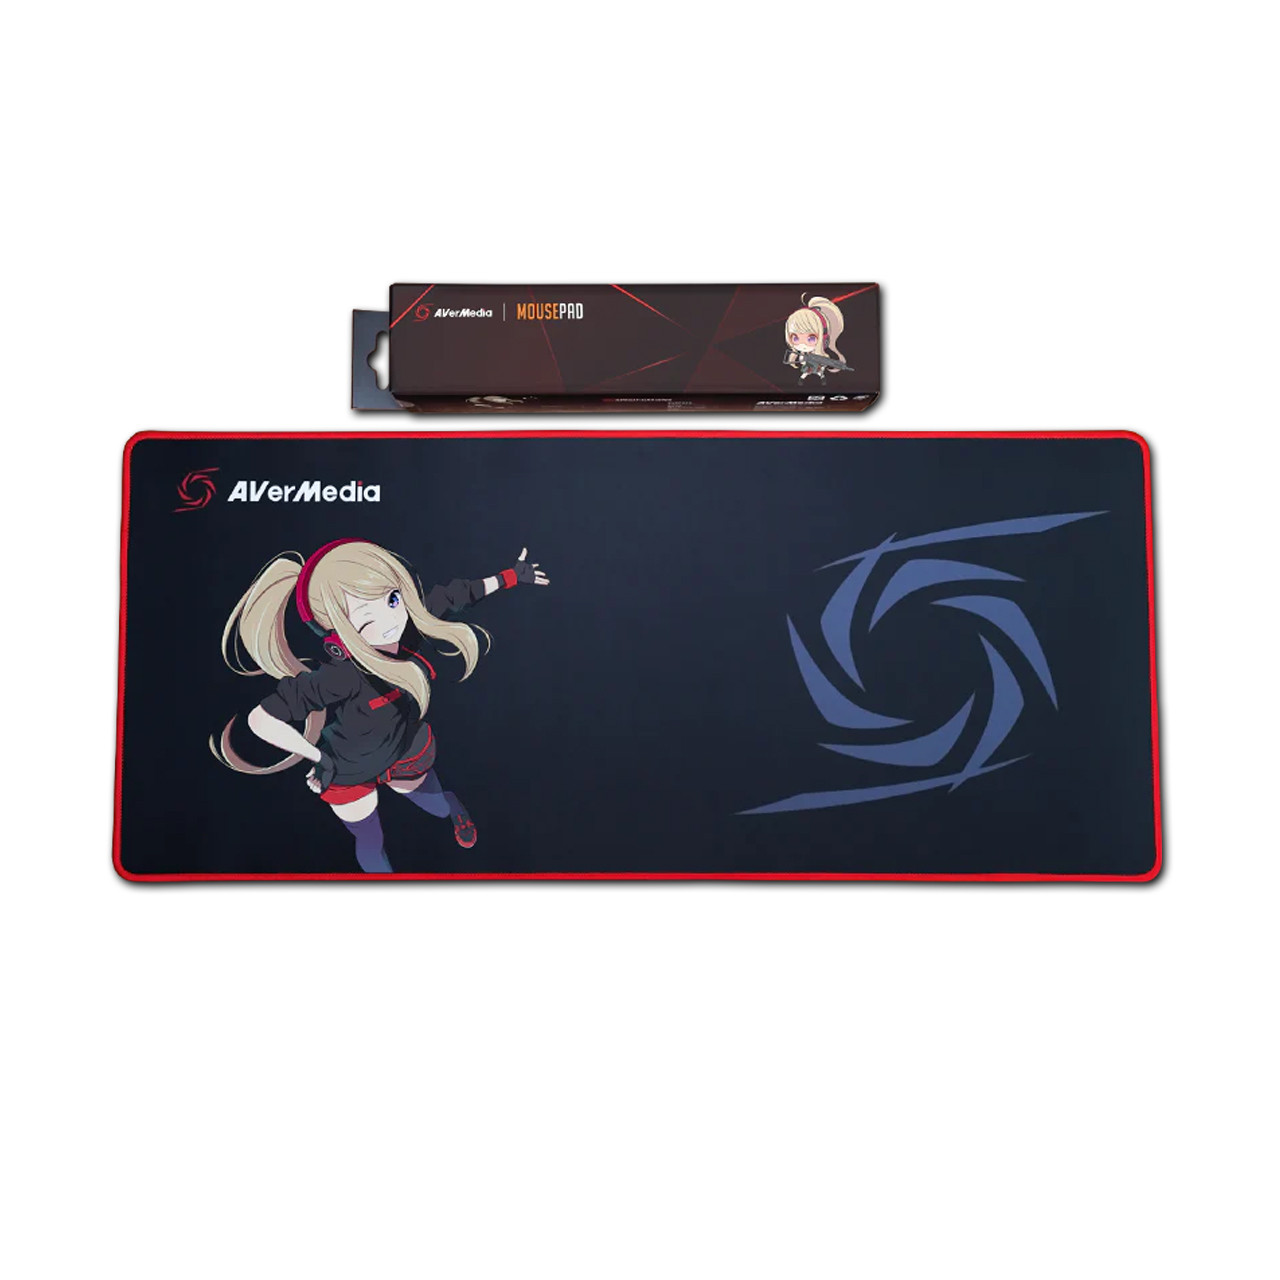 AVerMedia ELENA Mouse Pad | Anti-slip Rubber Base | Ultra Smooth Surface (Black)